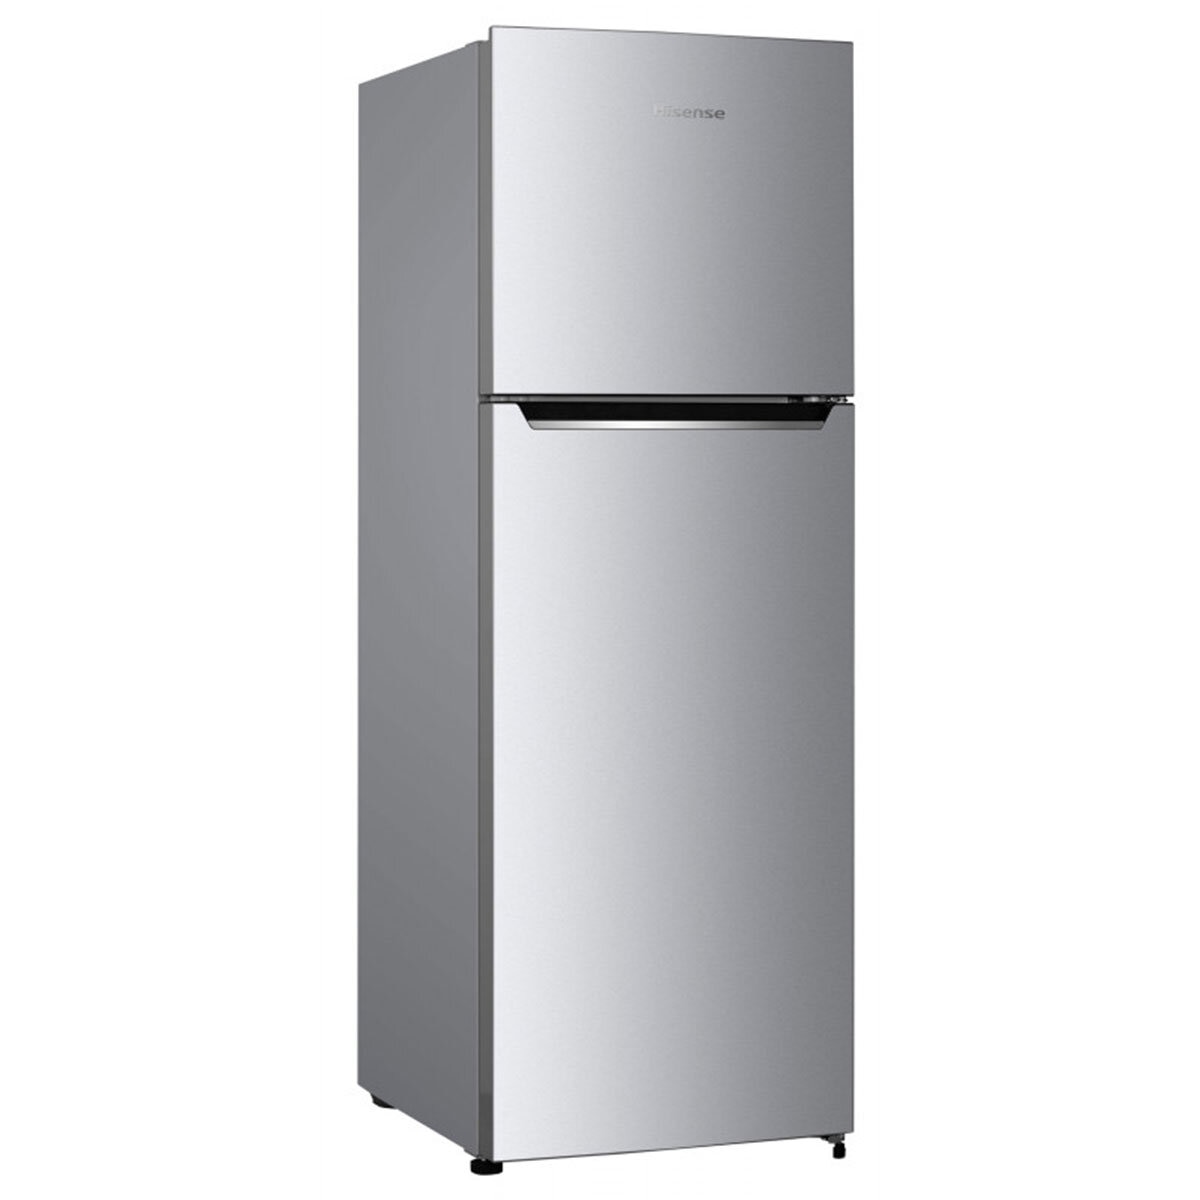 Hisense 326L Top Mount Refrigerator Stainless HRTF326S